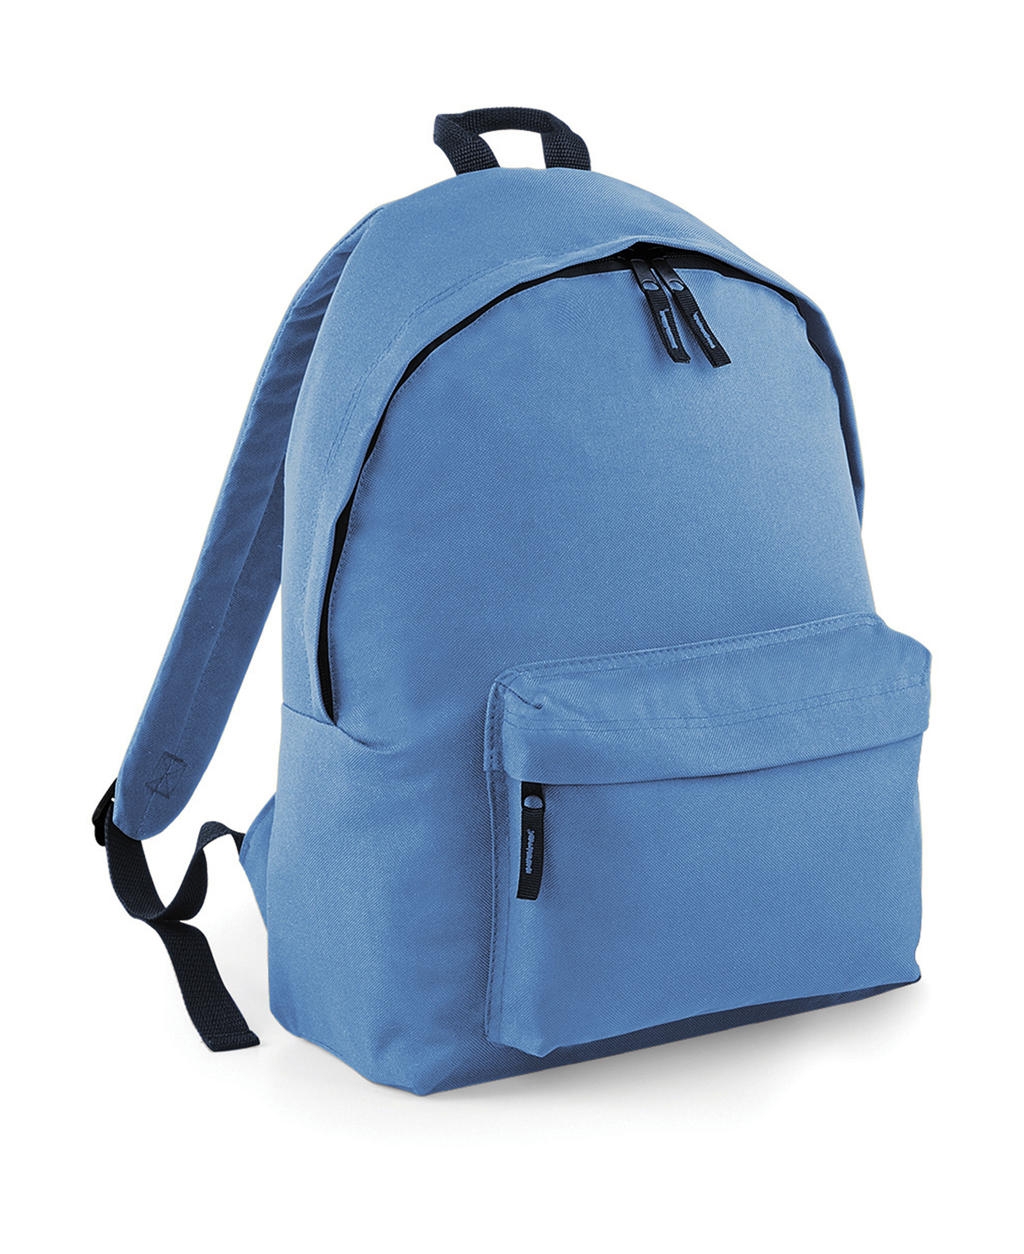 Fashion Backpack Sky Blue/French Navy Bleu